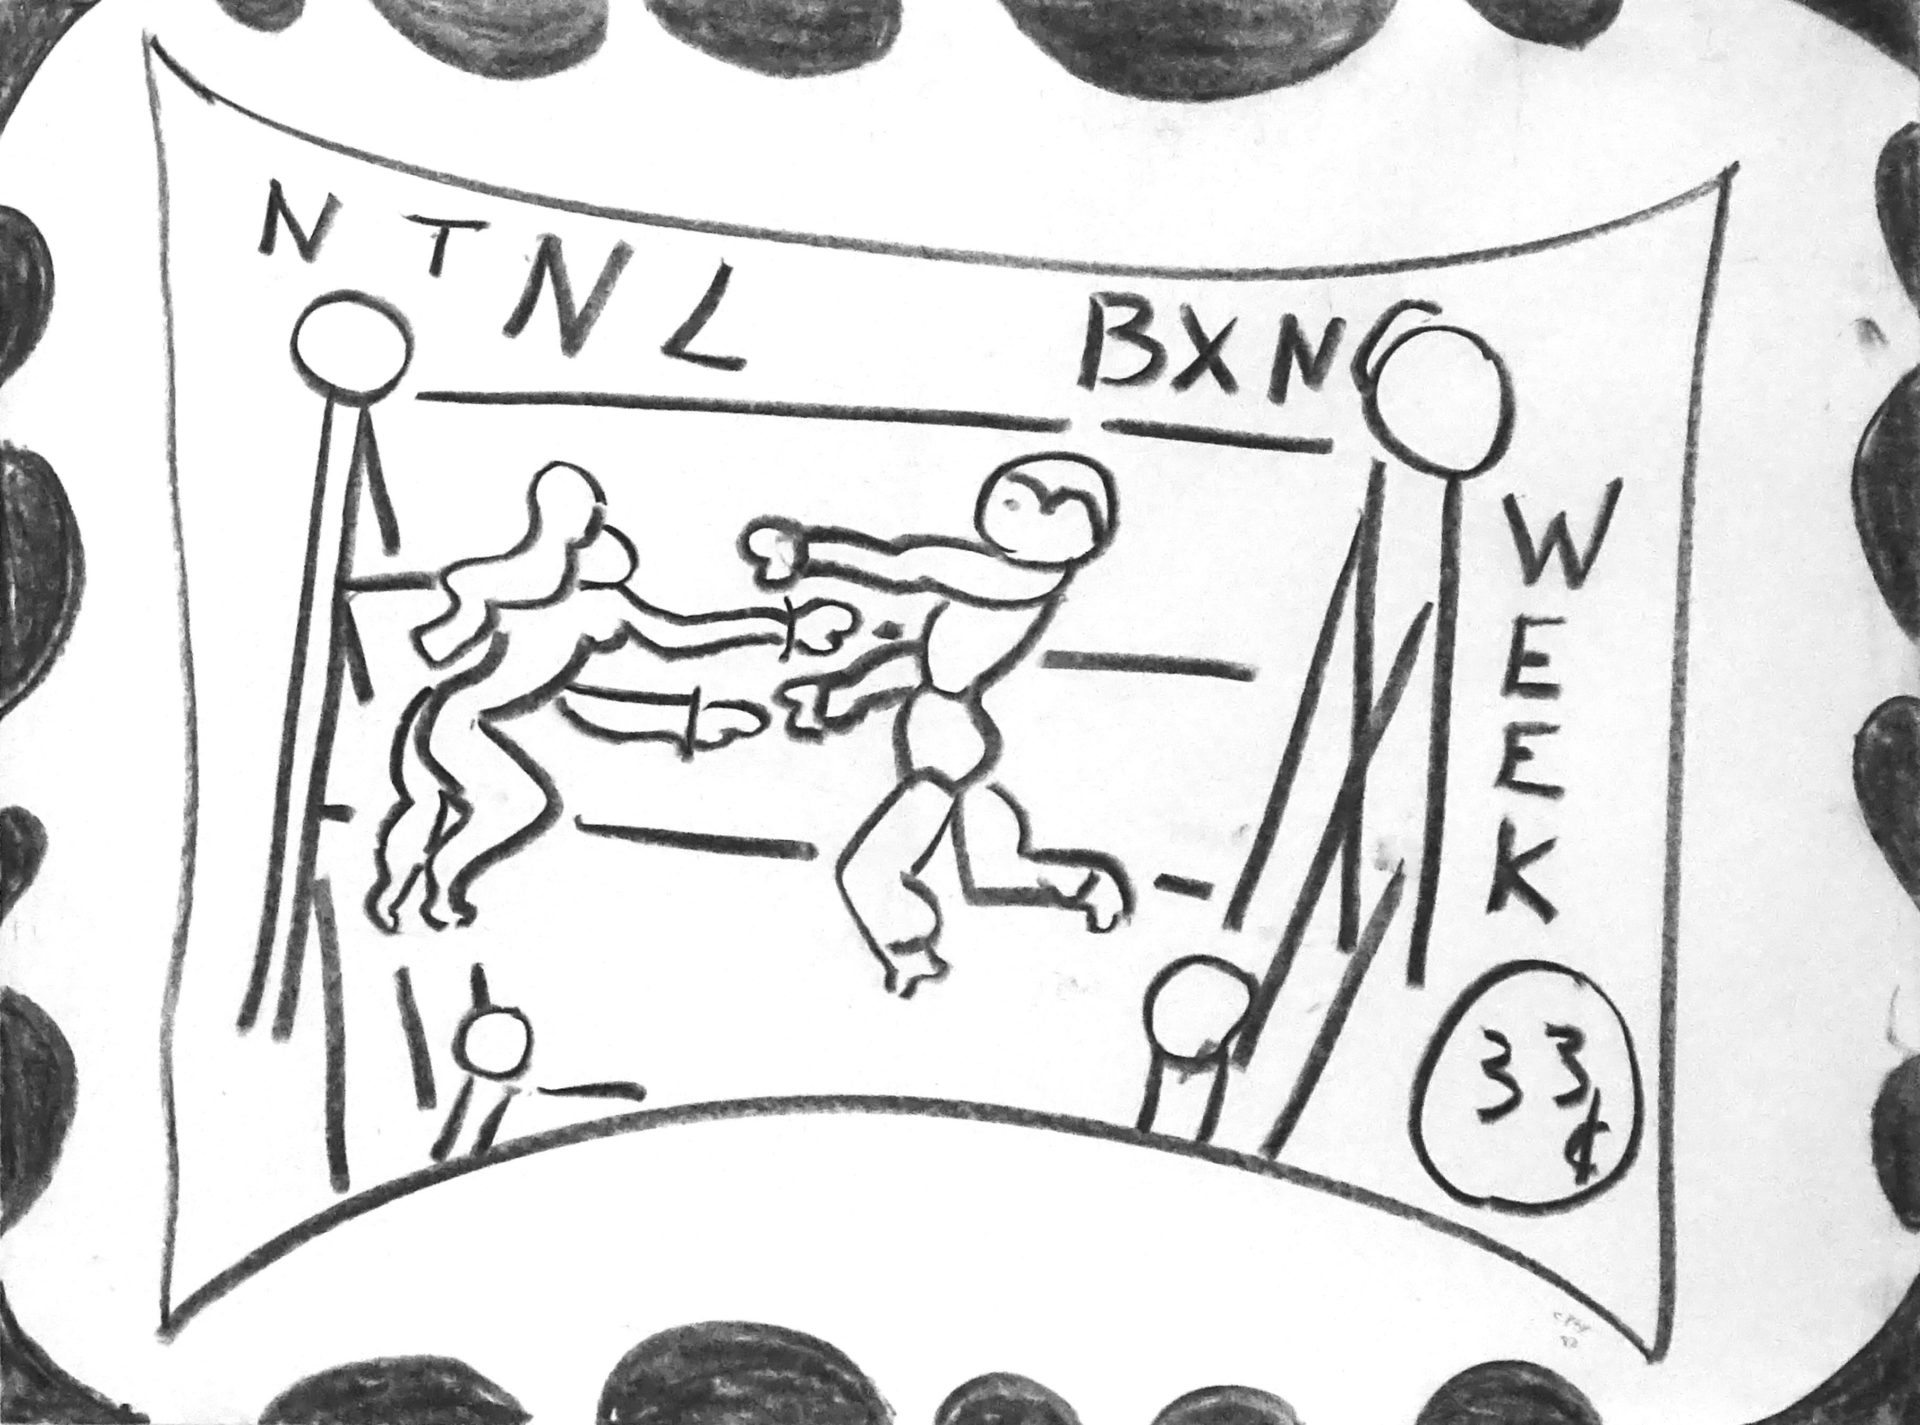 NTNL Bxng Week 33cents